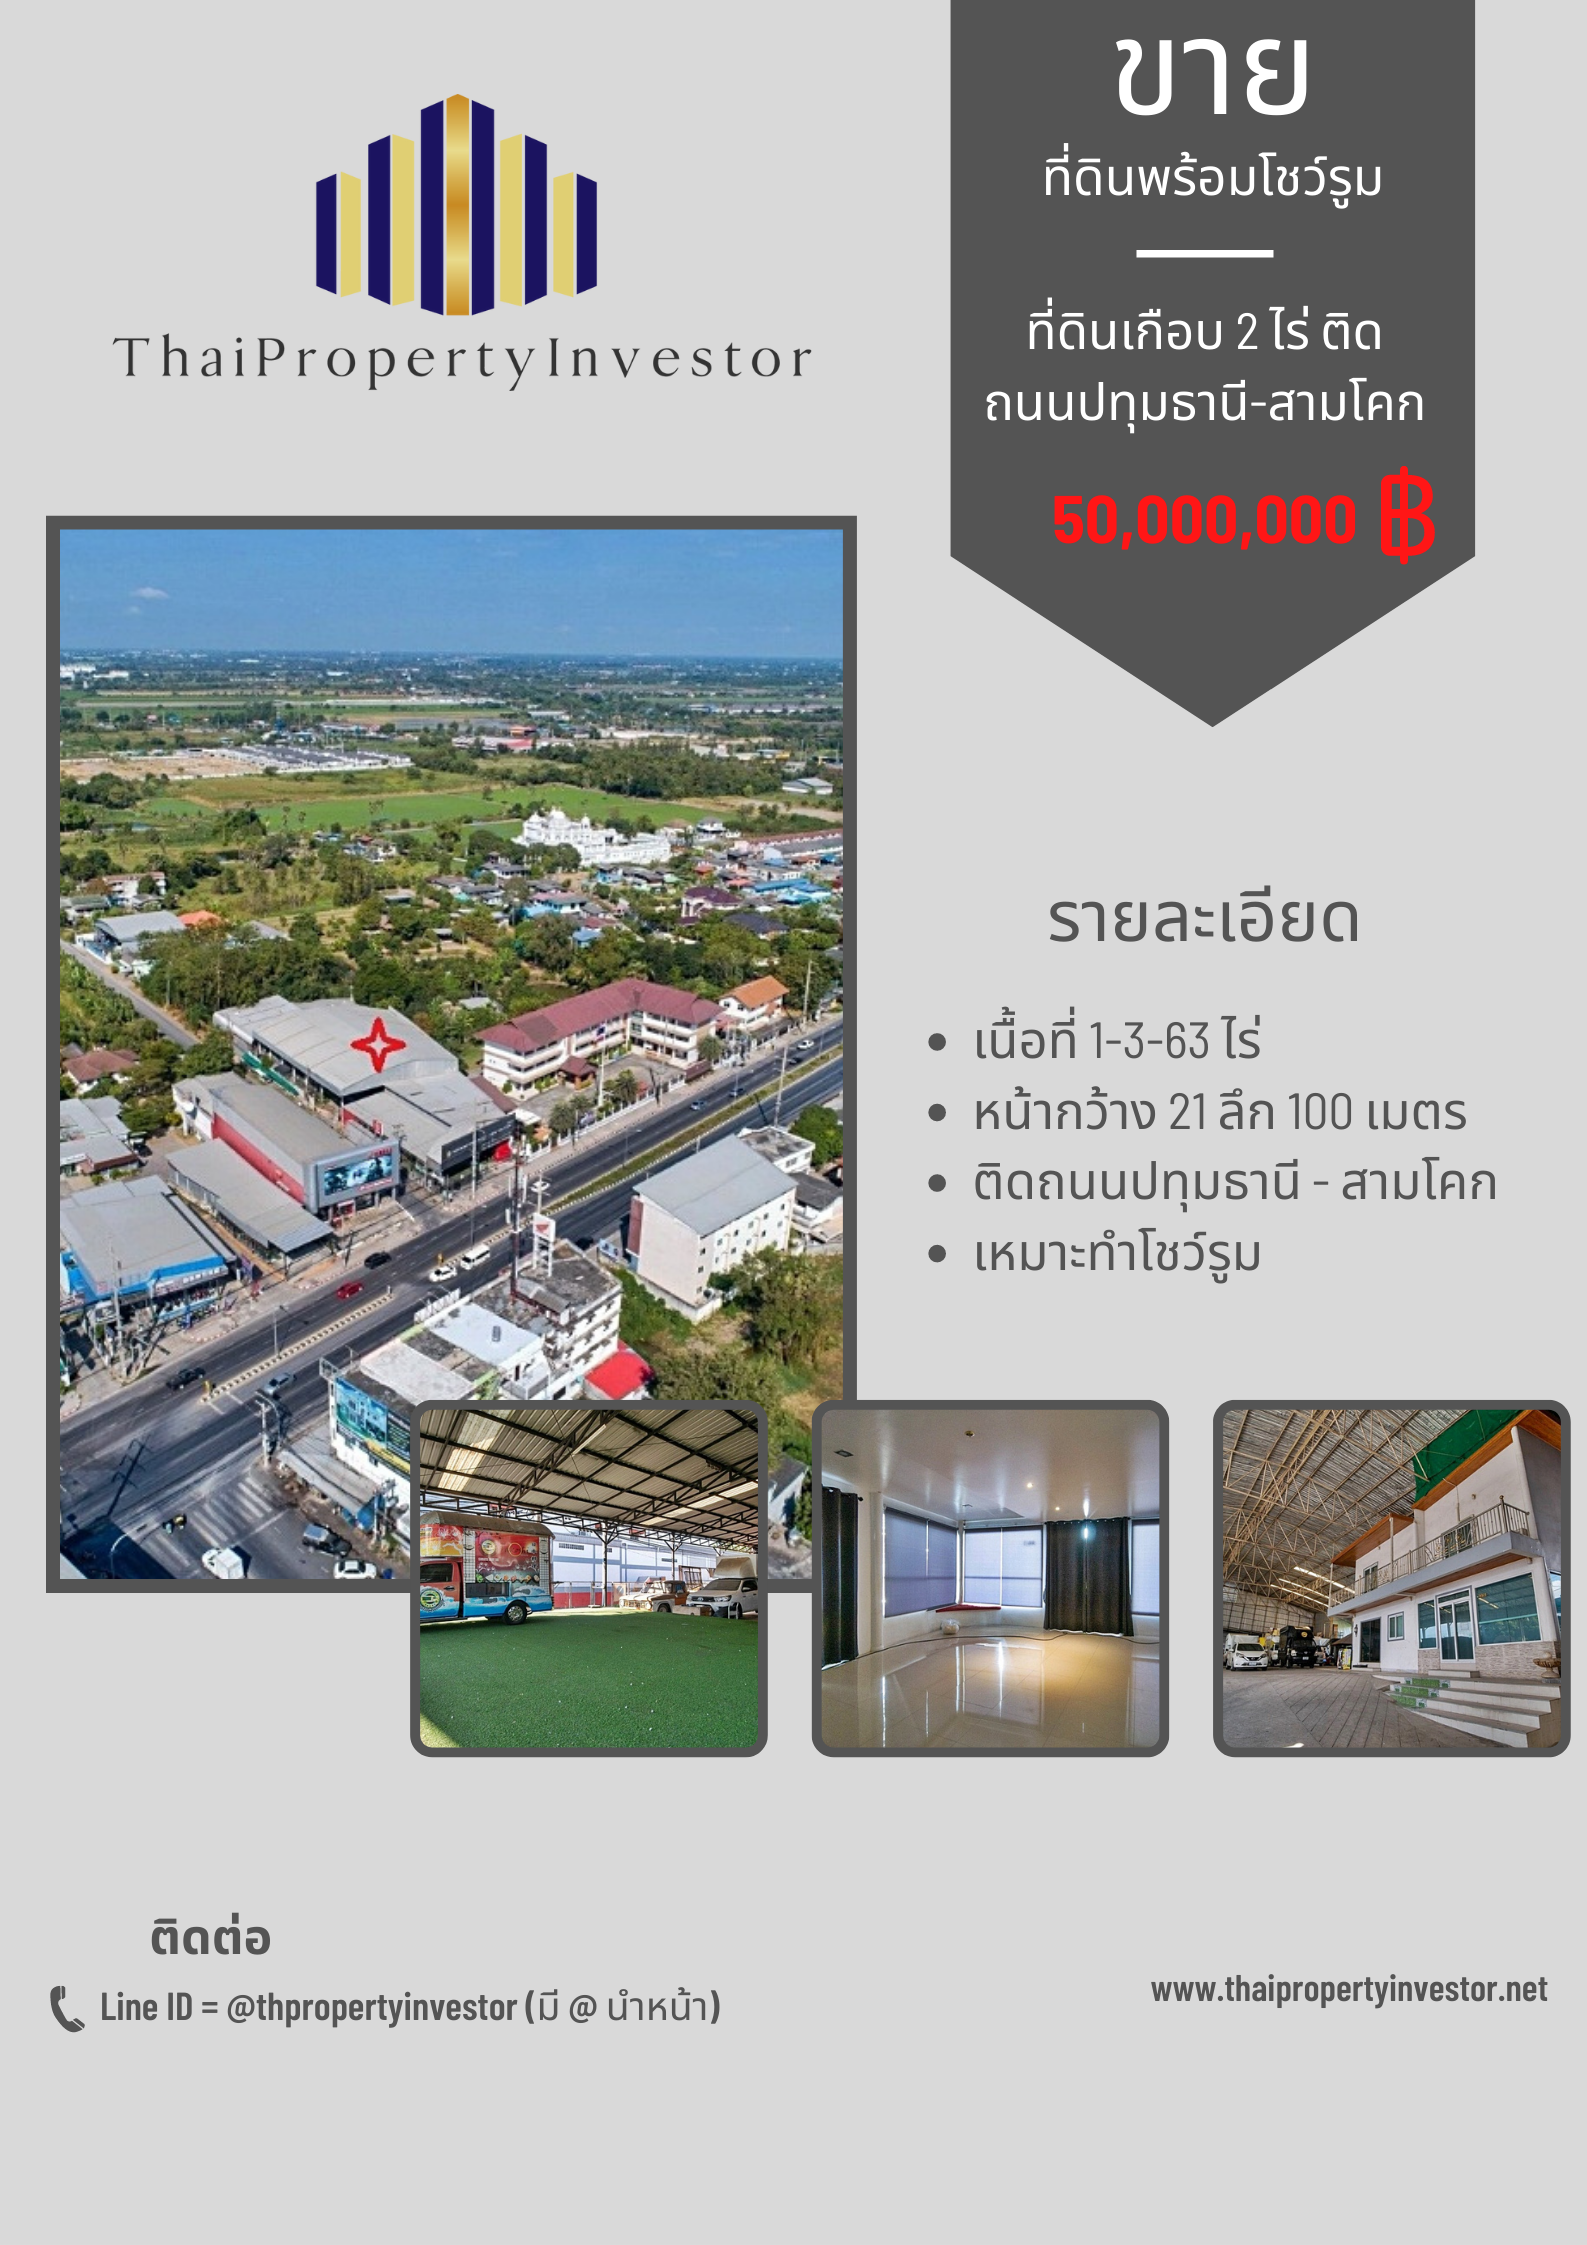 Showroom with Land for sale 1 rai Pathum Thani-Sam Khok road